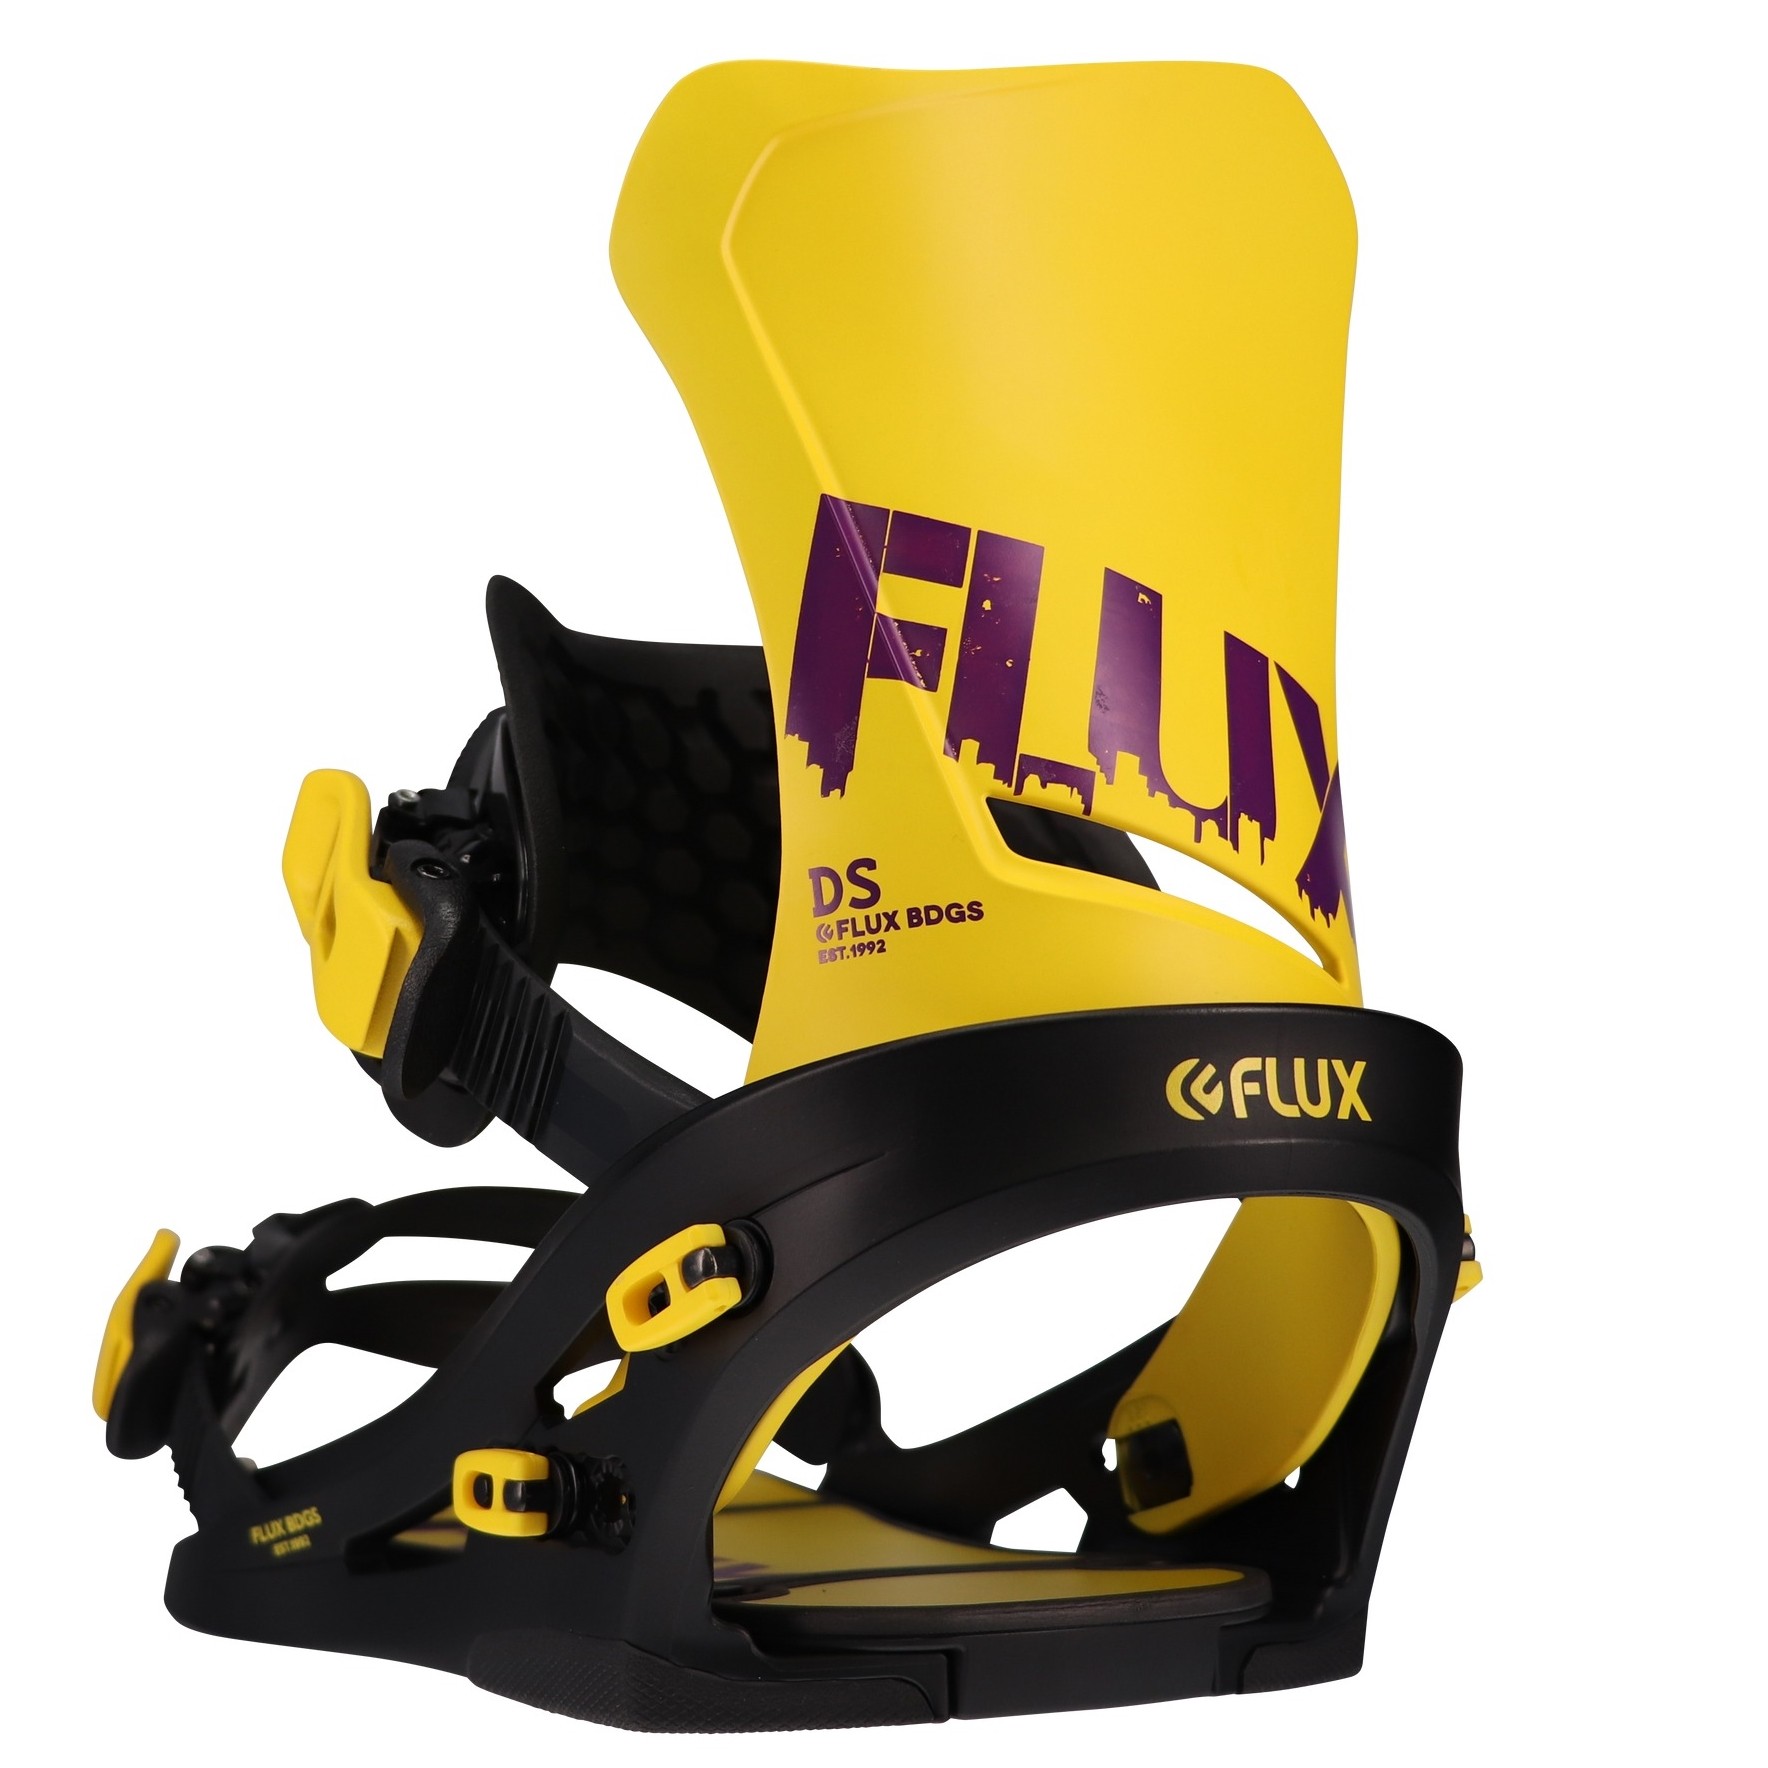 Flux Ds Yellow Purple Snowboard Bağlama